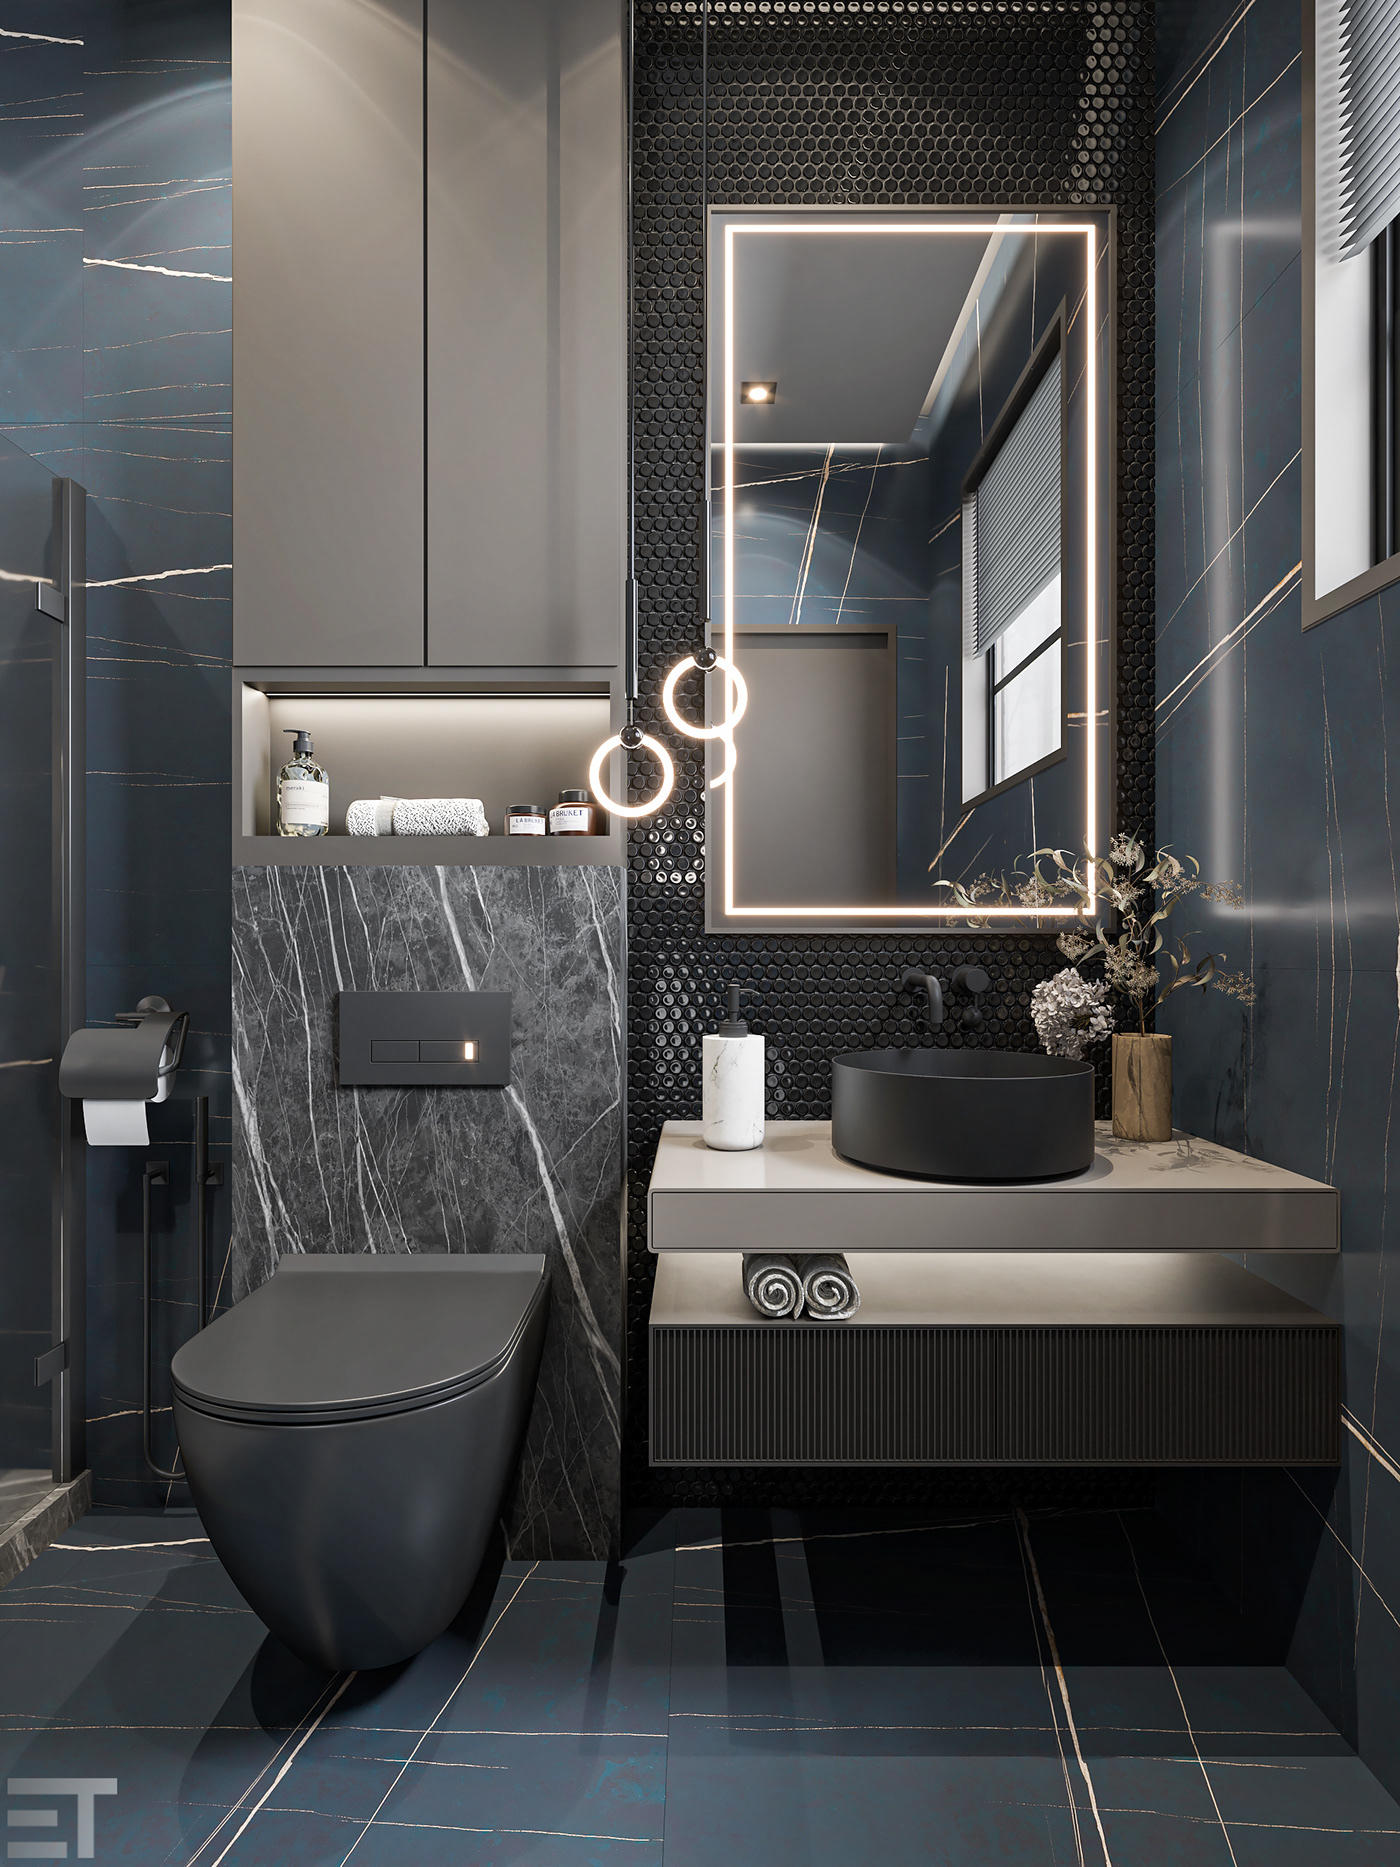 3D 3ds max architecture CGI visualization vray bathroom Render modern